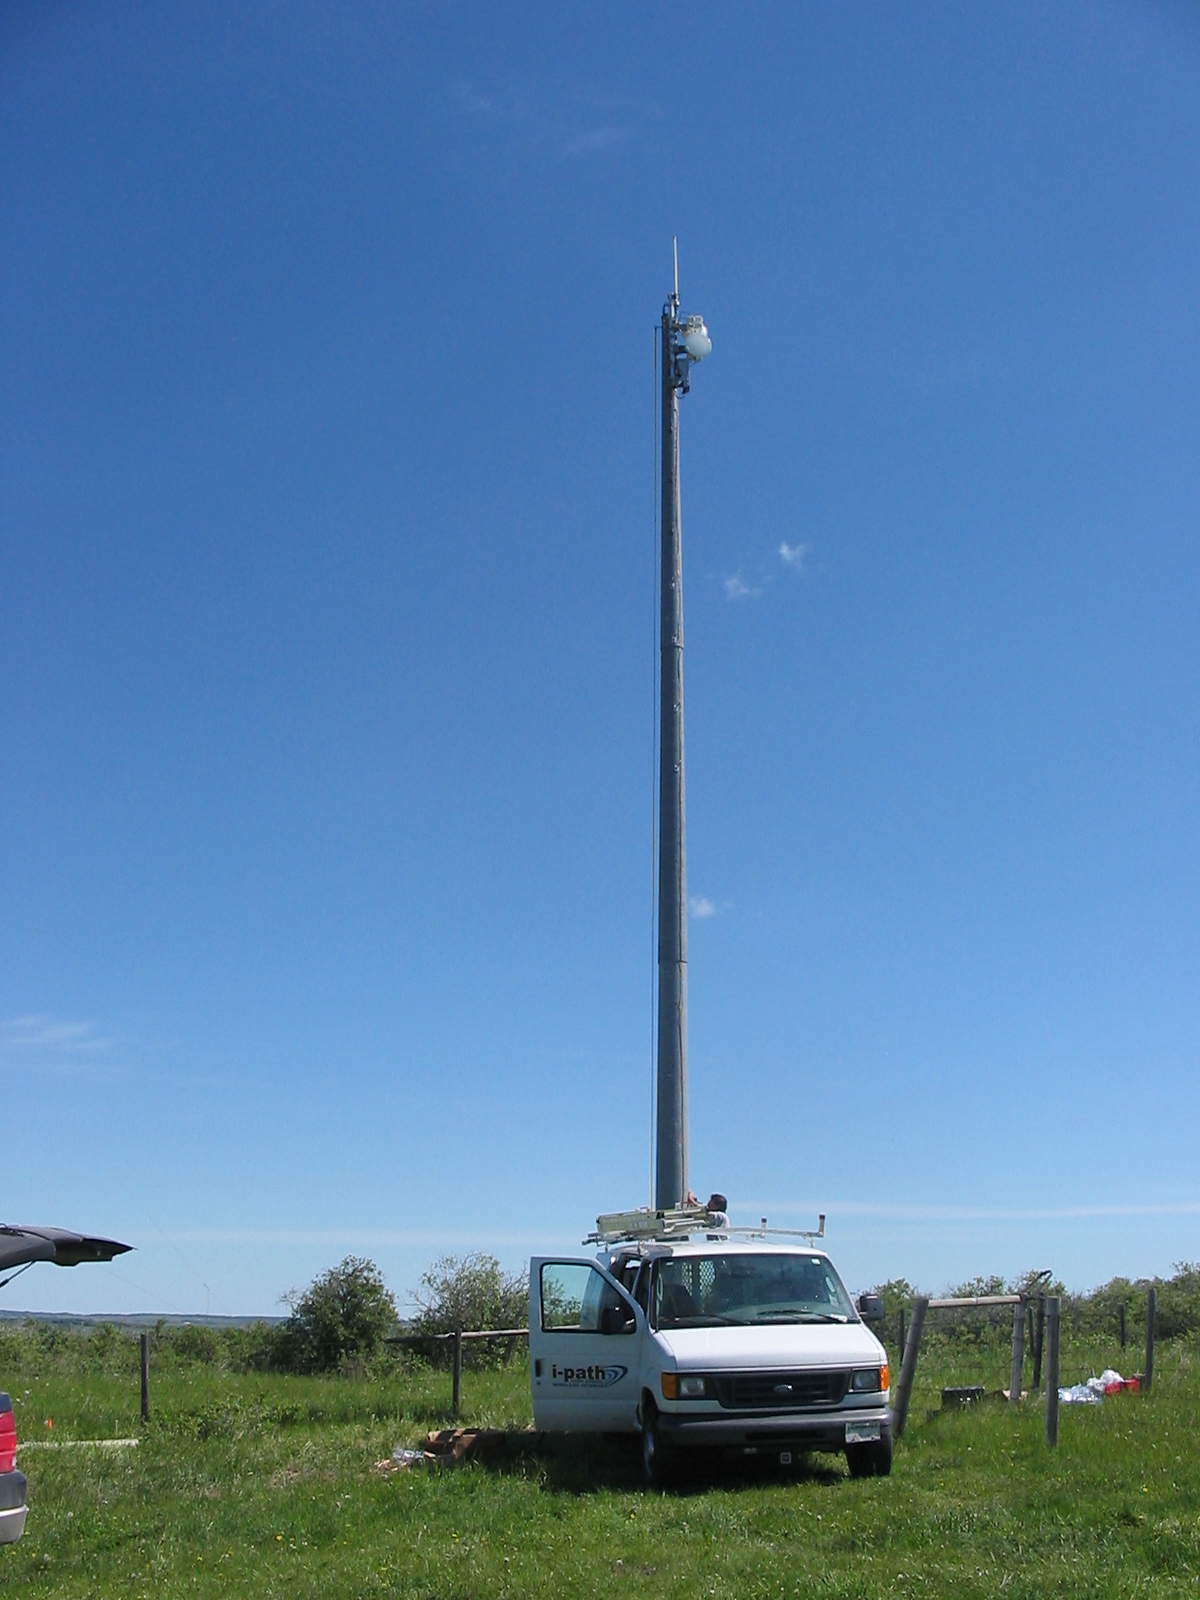 RS composite poles installed for Pathcom initiative